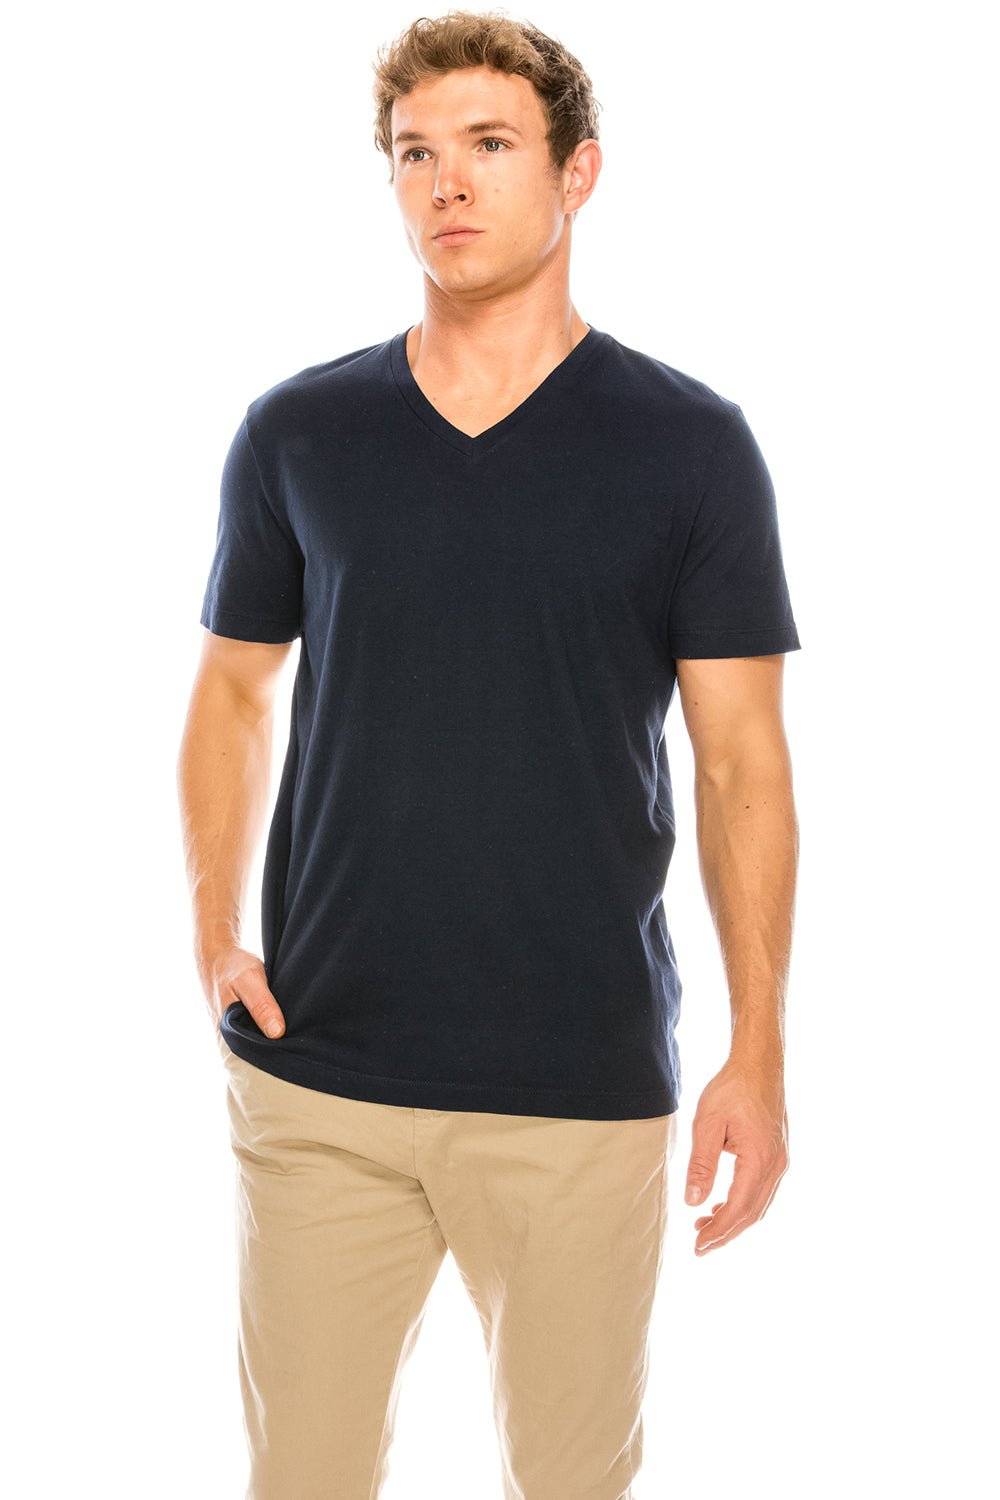 Men's Essential Cotton V-Neck T-Shirt by YURO-K